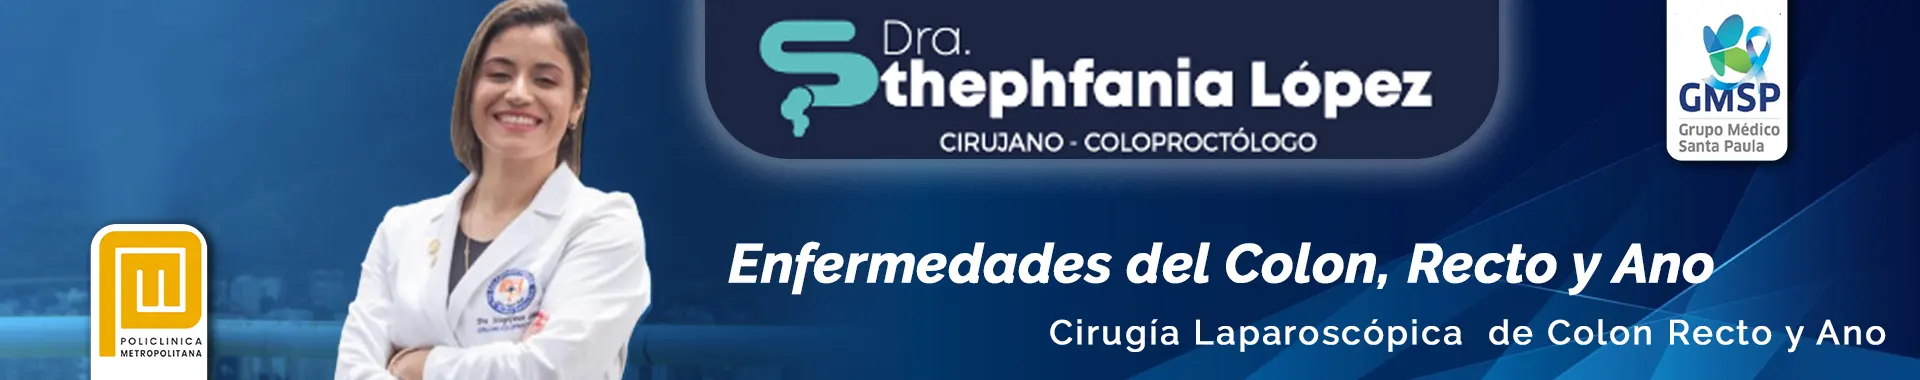 Imagen 2 del perfil de Dra. Sthephfania López